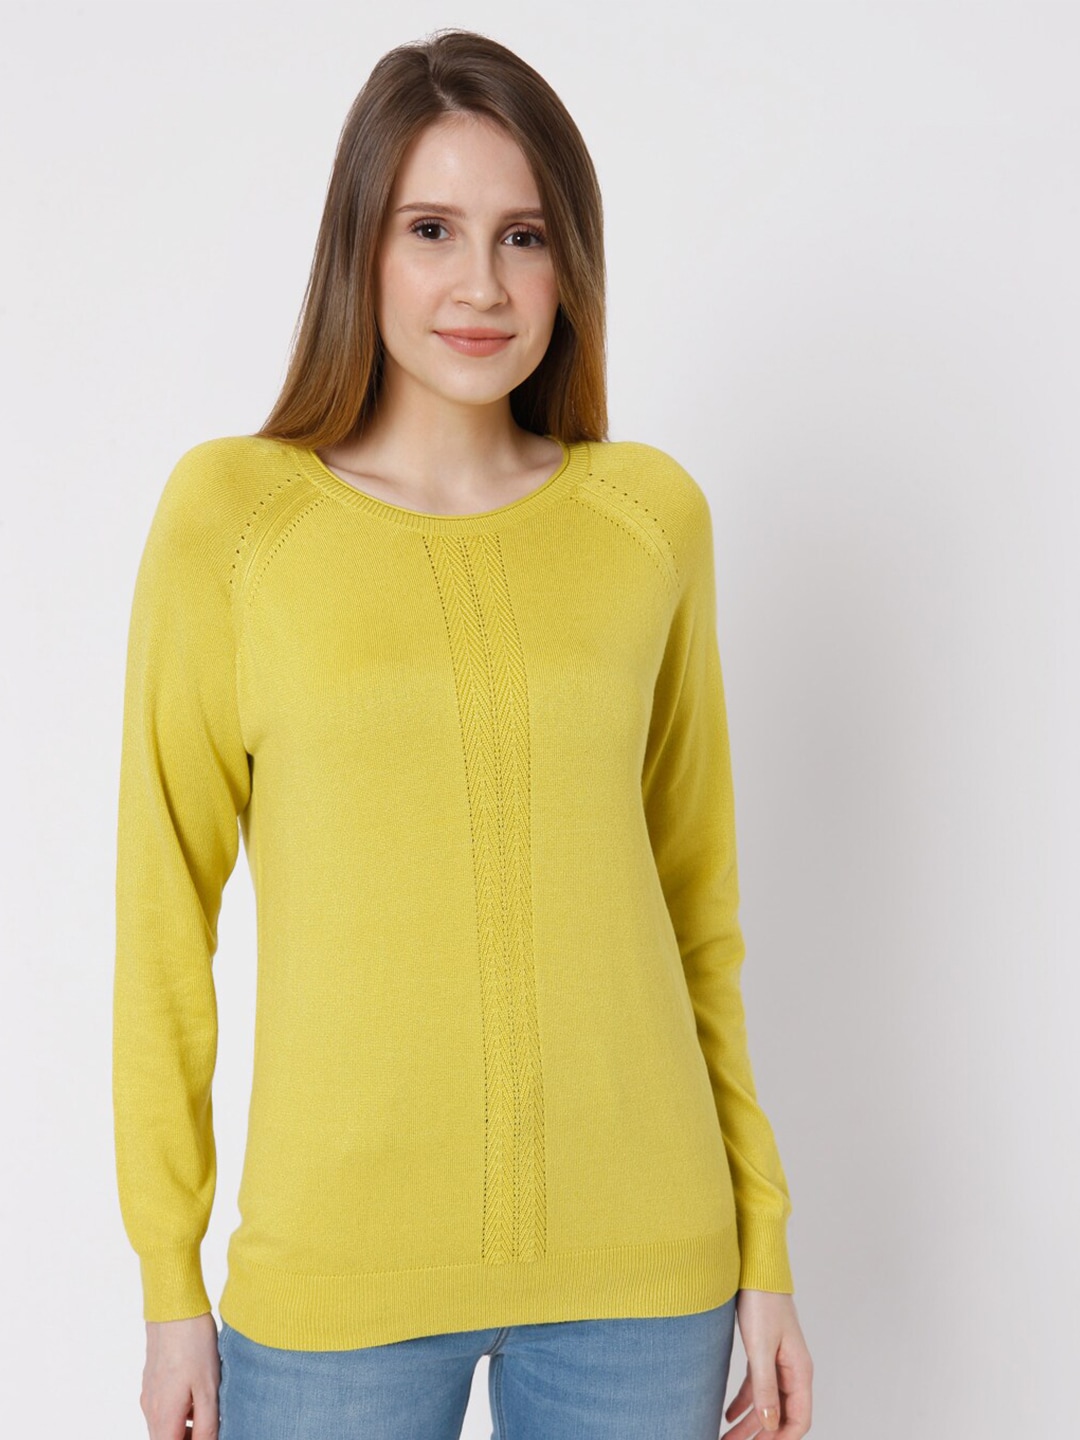 Vero Moda Women Yellow Pullover Price in India